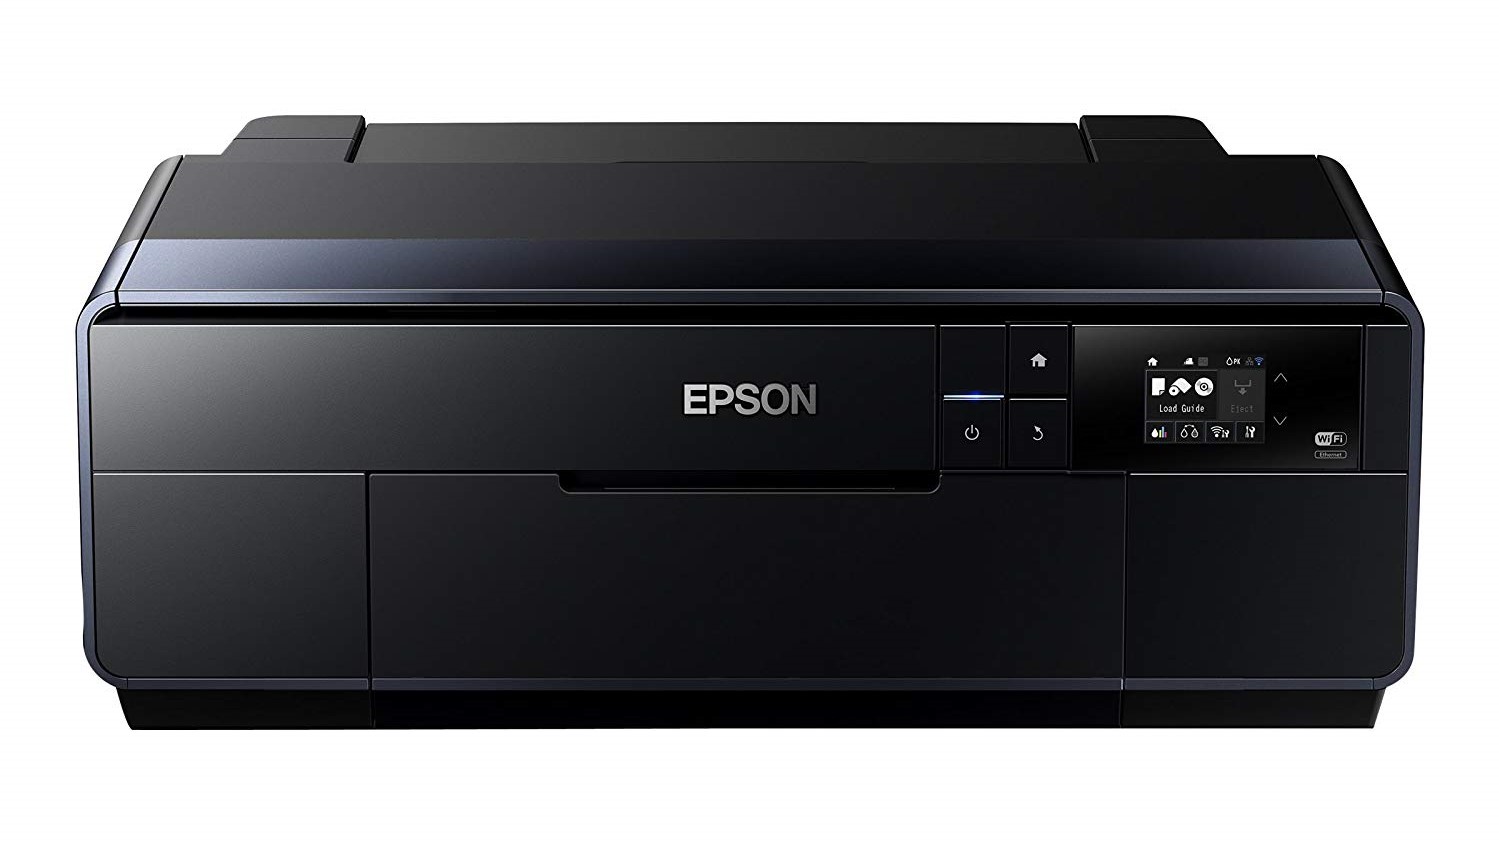 Epson SureColor P600 photo printer